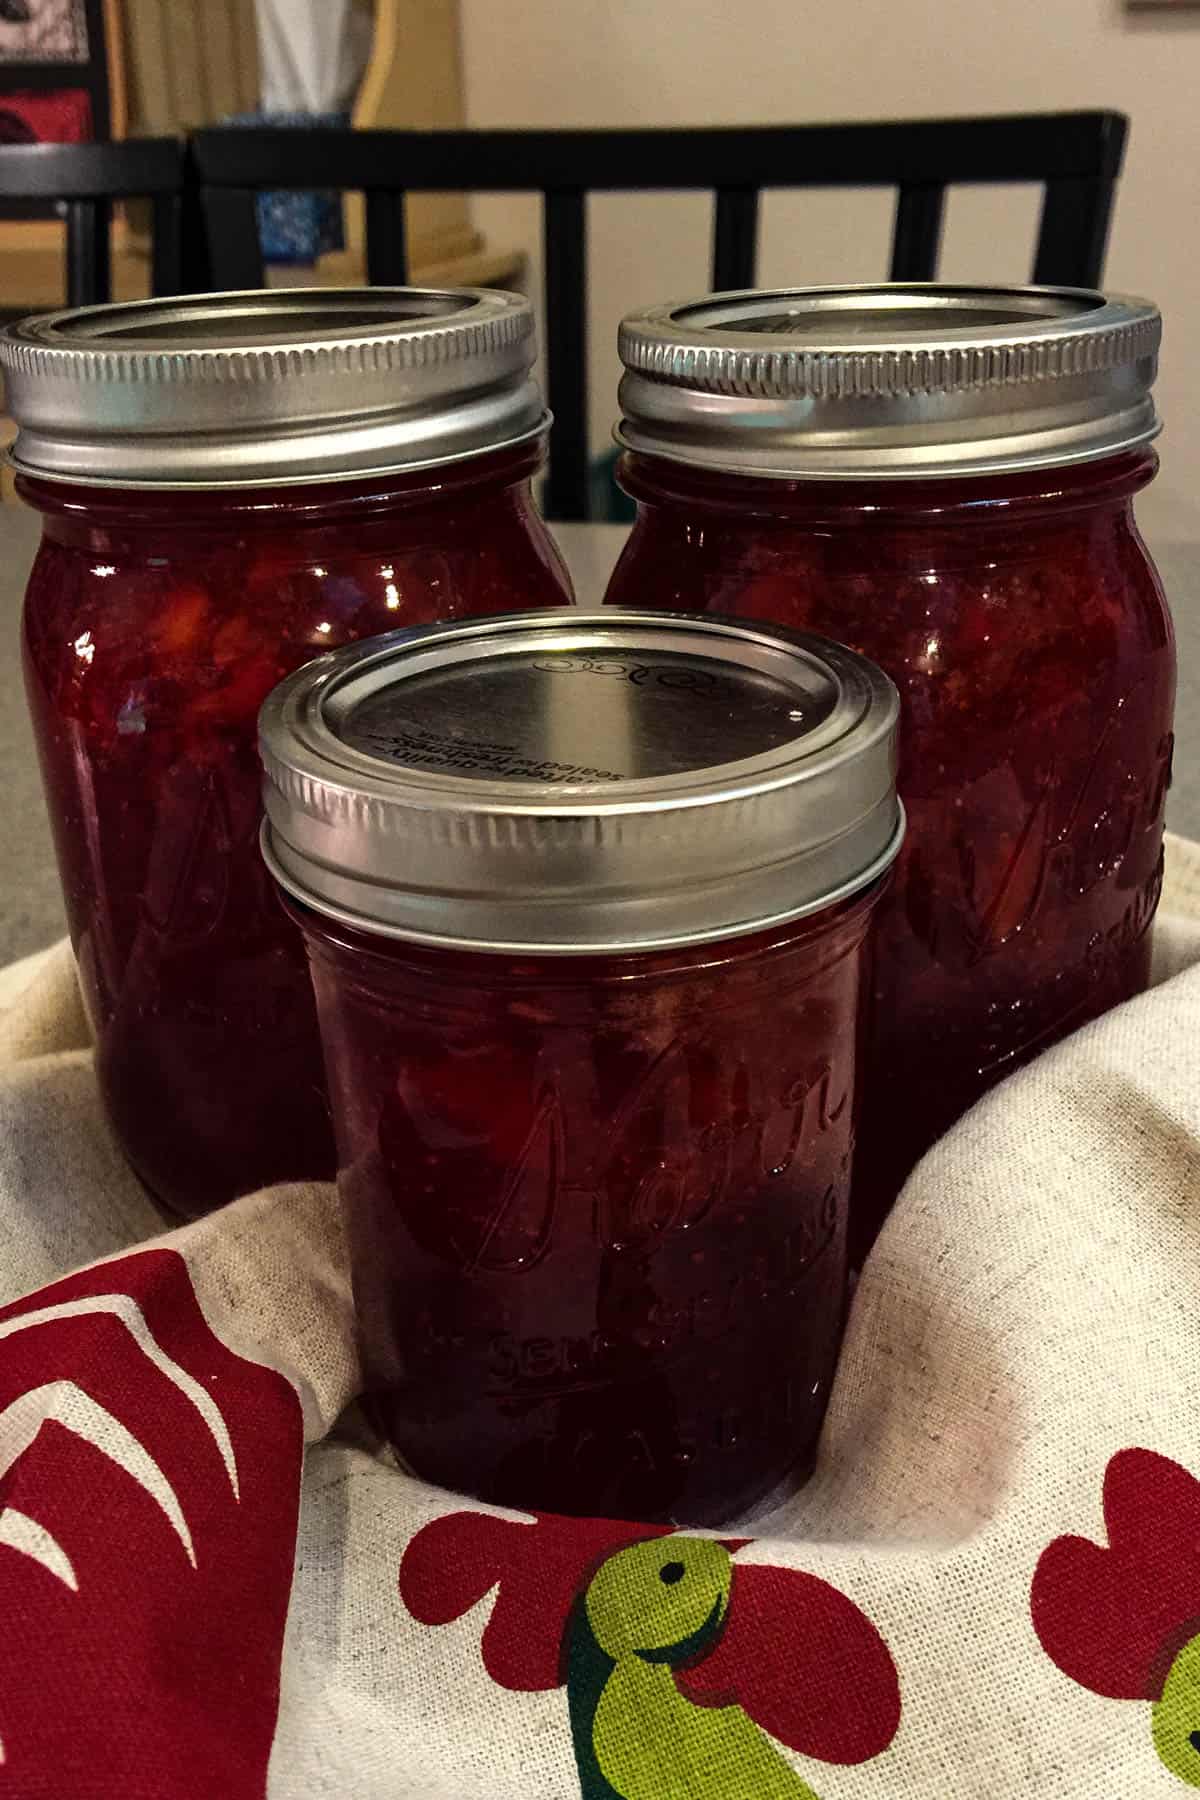 Three jars of canned strawberry jam.